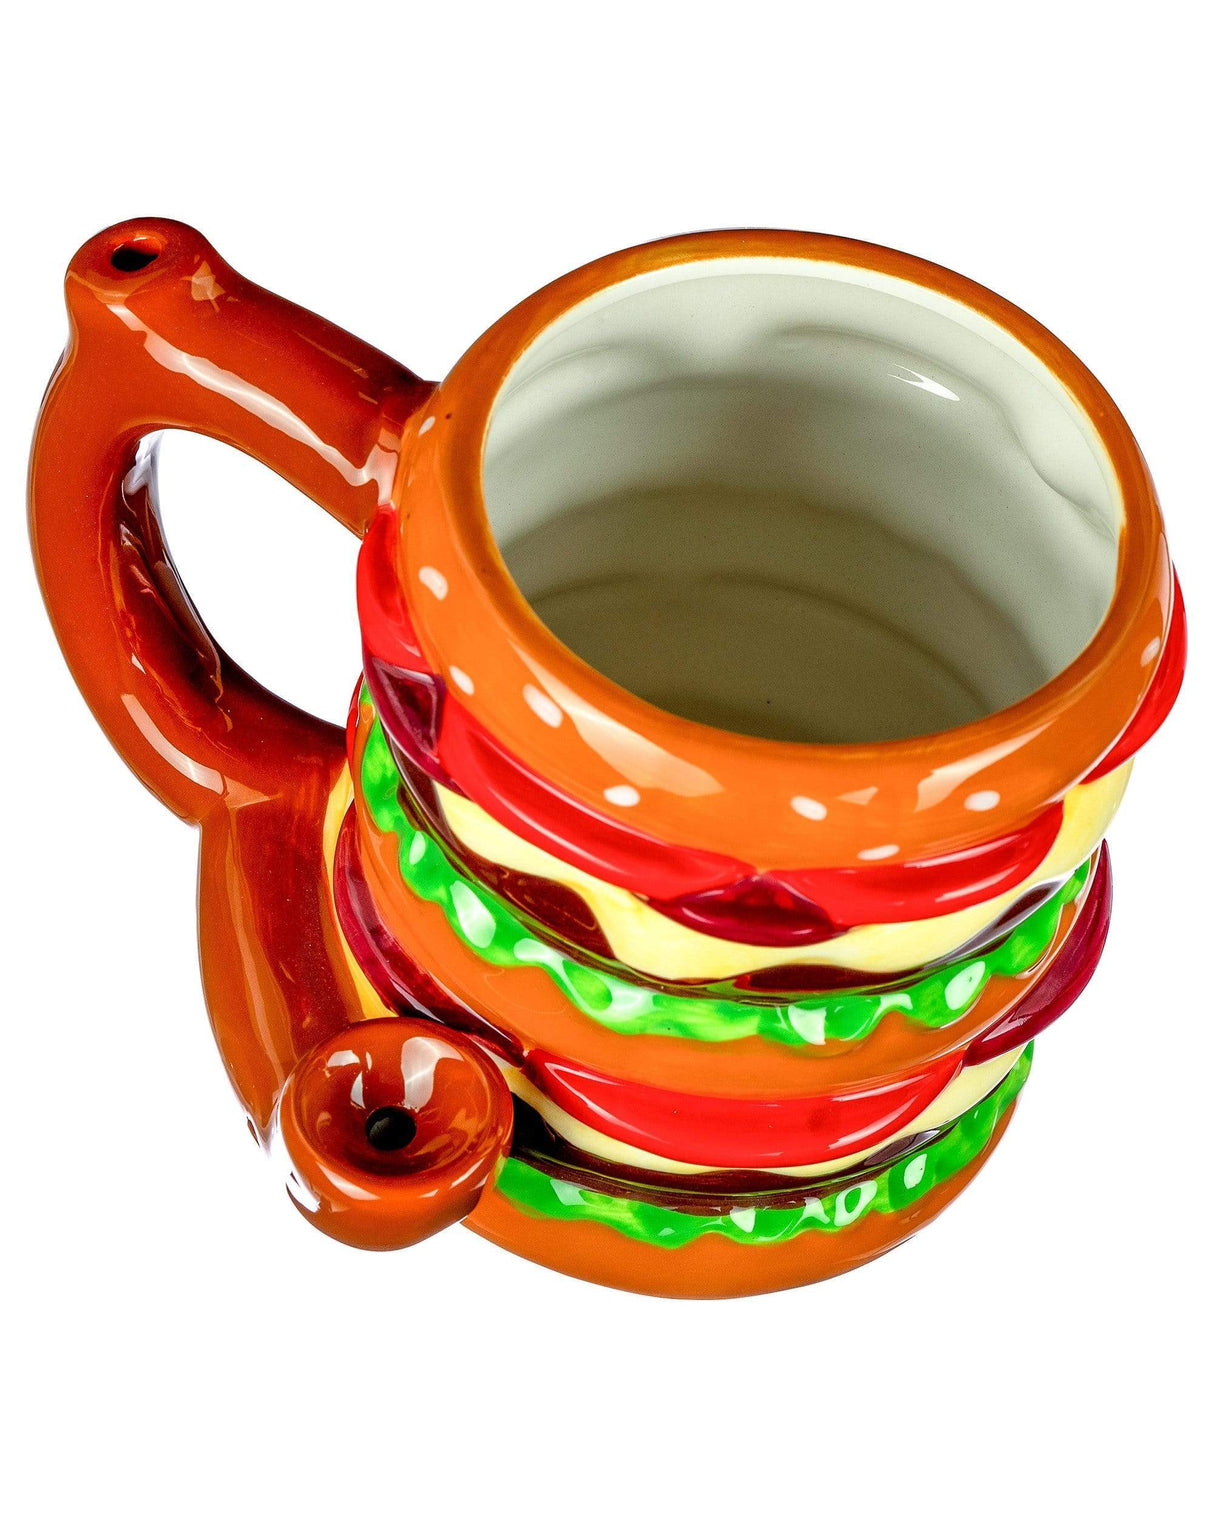 Double Cheeseburger Pipe Mug | Online Headshop | Dank Geek